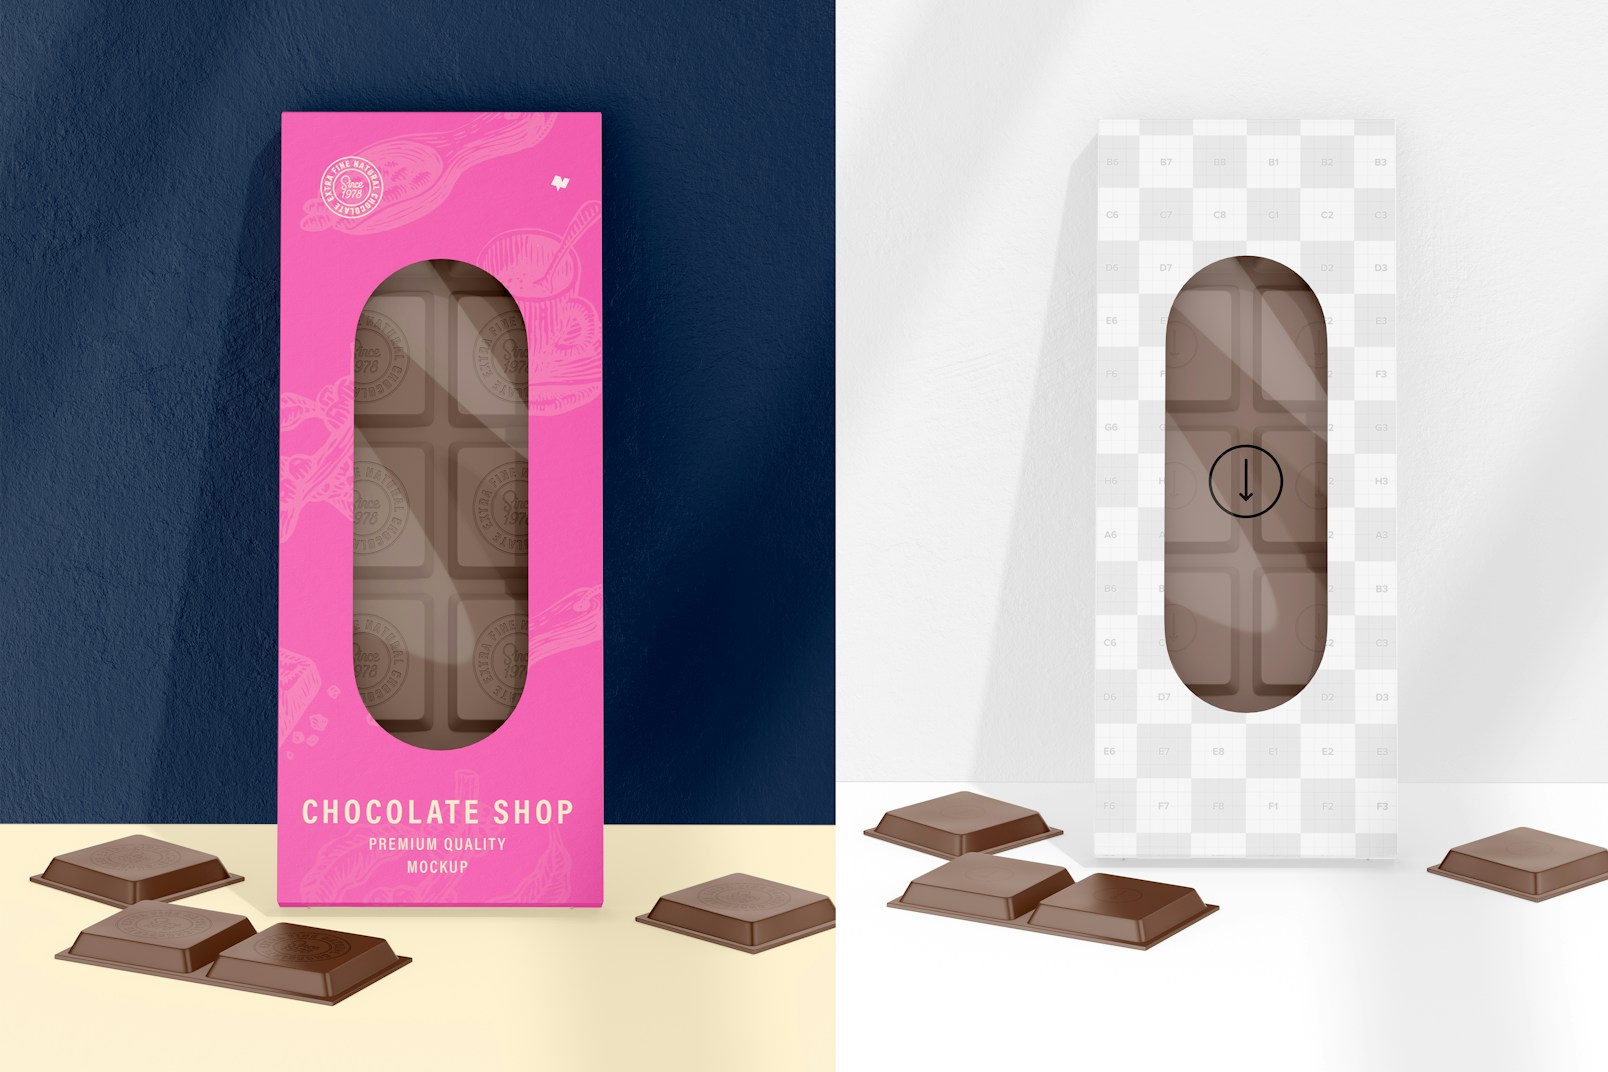 Maqueta de Cajas con Ventana Ovalada para Chocolate, Vista Frontal